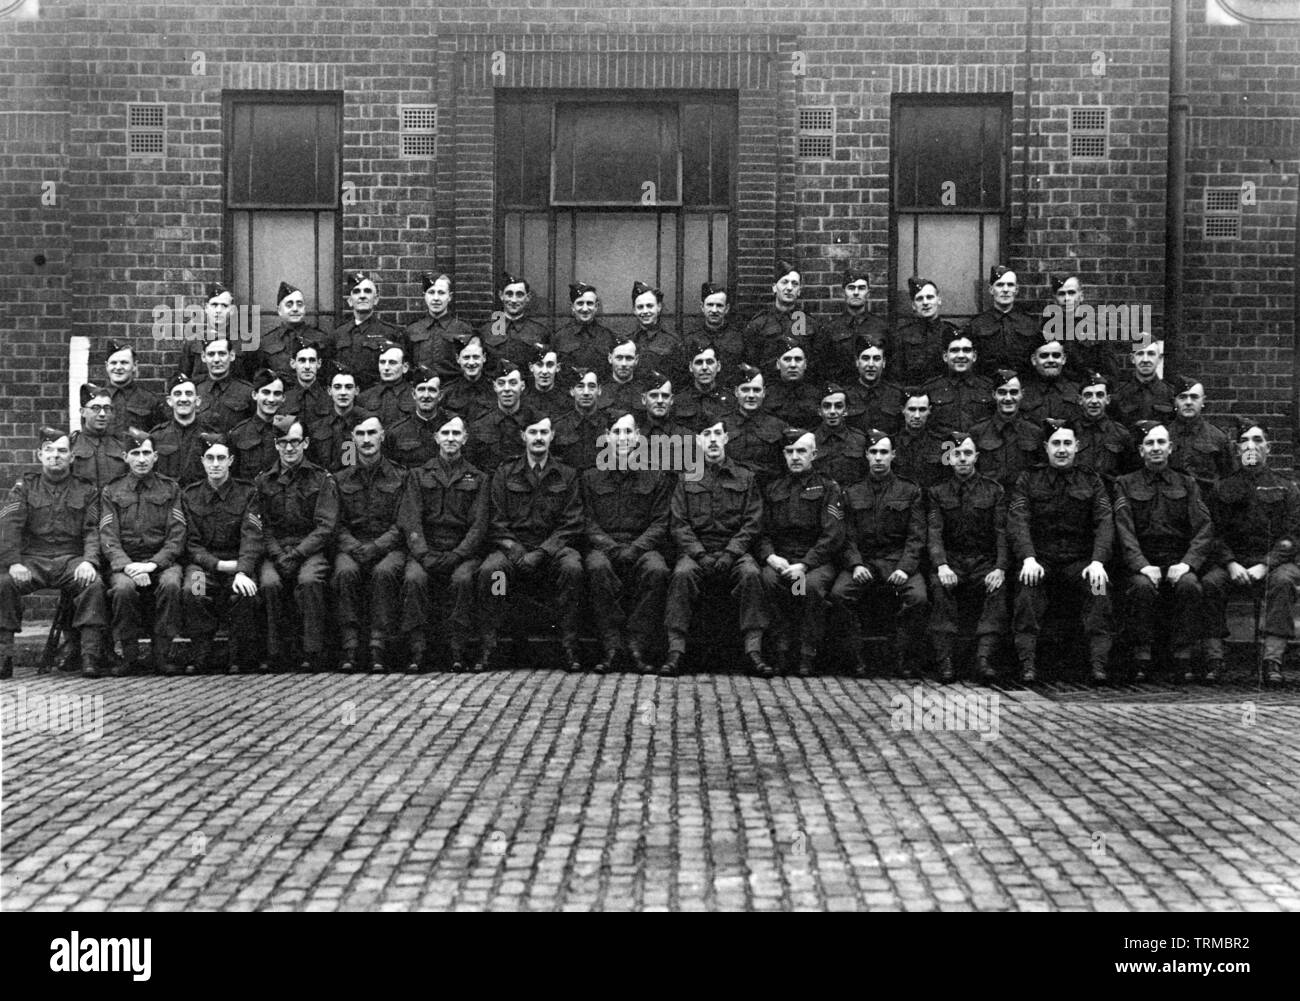 WW2 Home Guard Battalion - possibly Cheshire Stock Photo